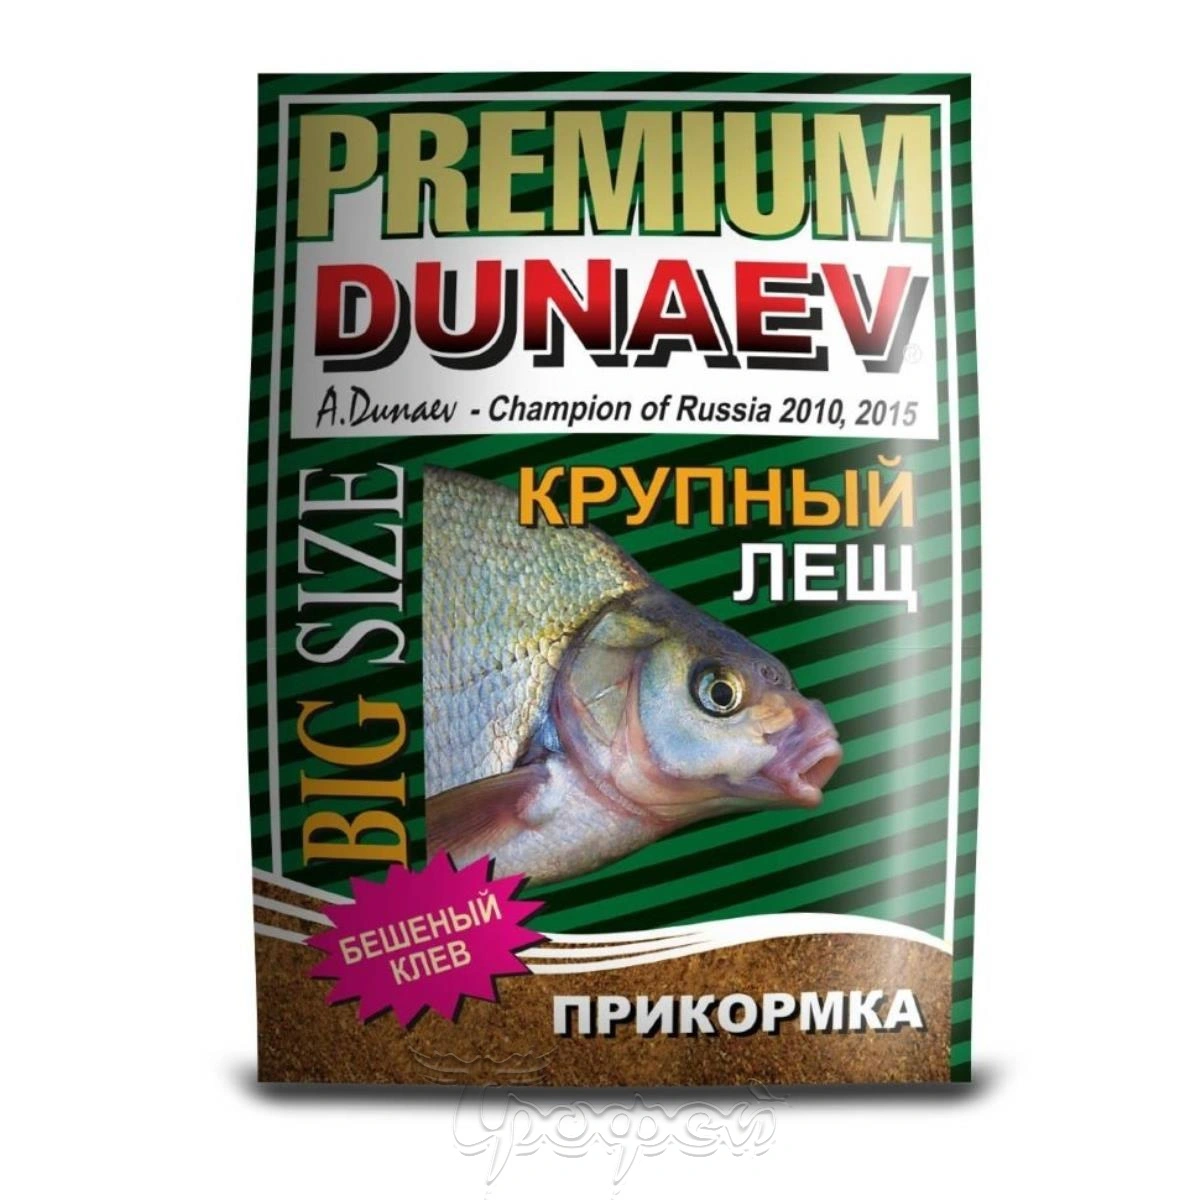 Дунаевым прикормка. Прикормка "Dunaev-Premium" 1кг лещ крупная фракция. Прикормка "Dunaev-Premium" крупная фракция, 1 кг. Крупный лещ прикормка Дунаев премиум. Dunaev Premium крупный лещ.